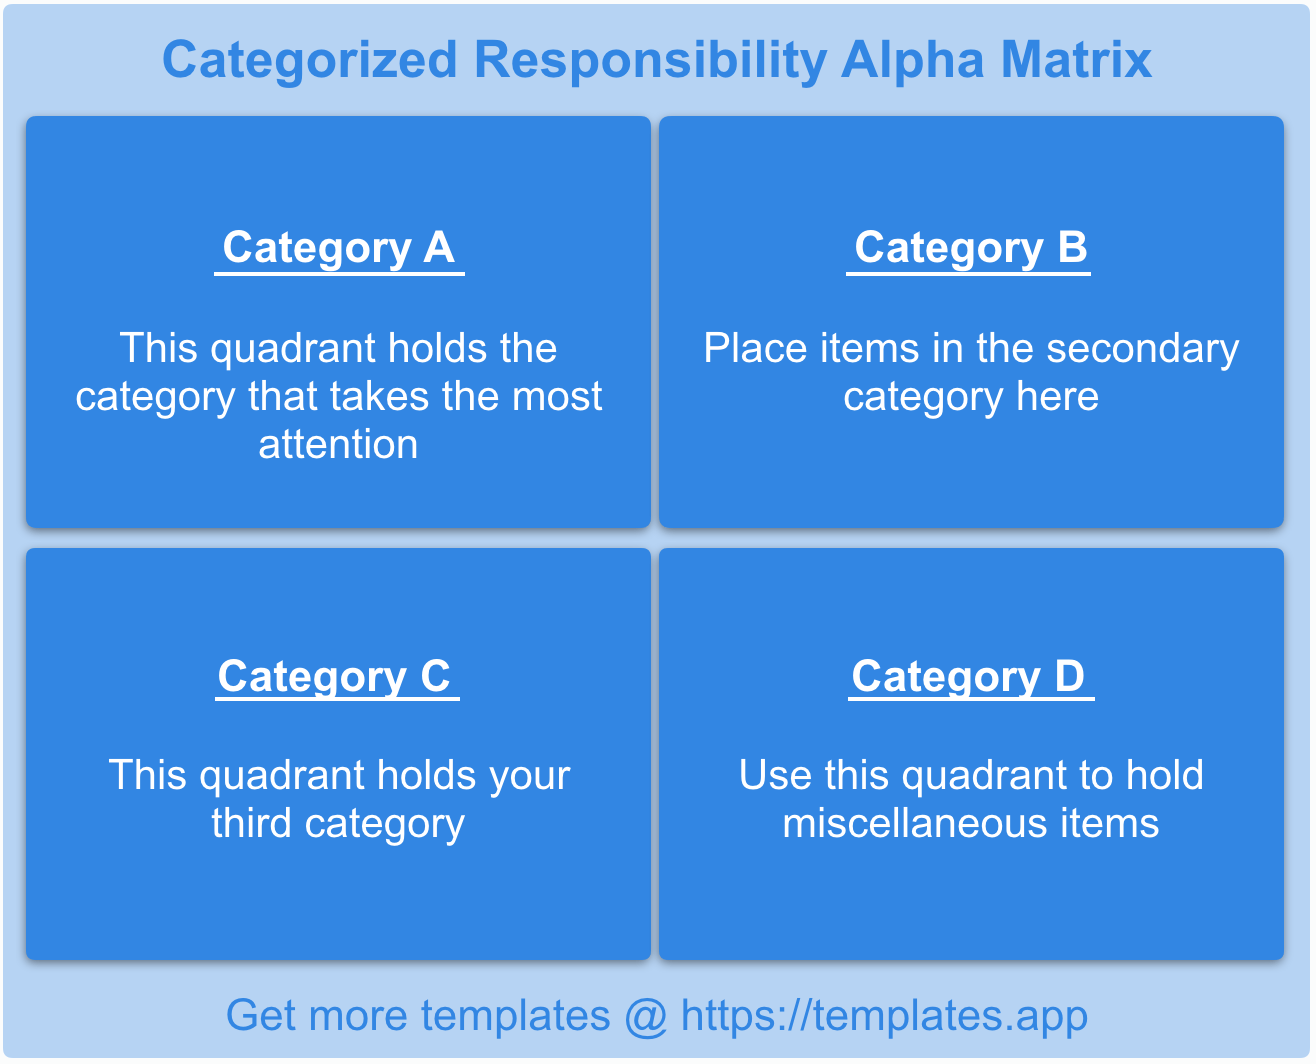 The Categorized Responsibility Alpha Matrix by templates.app